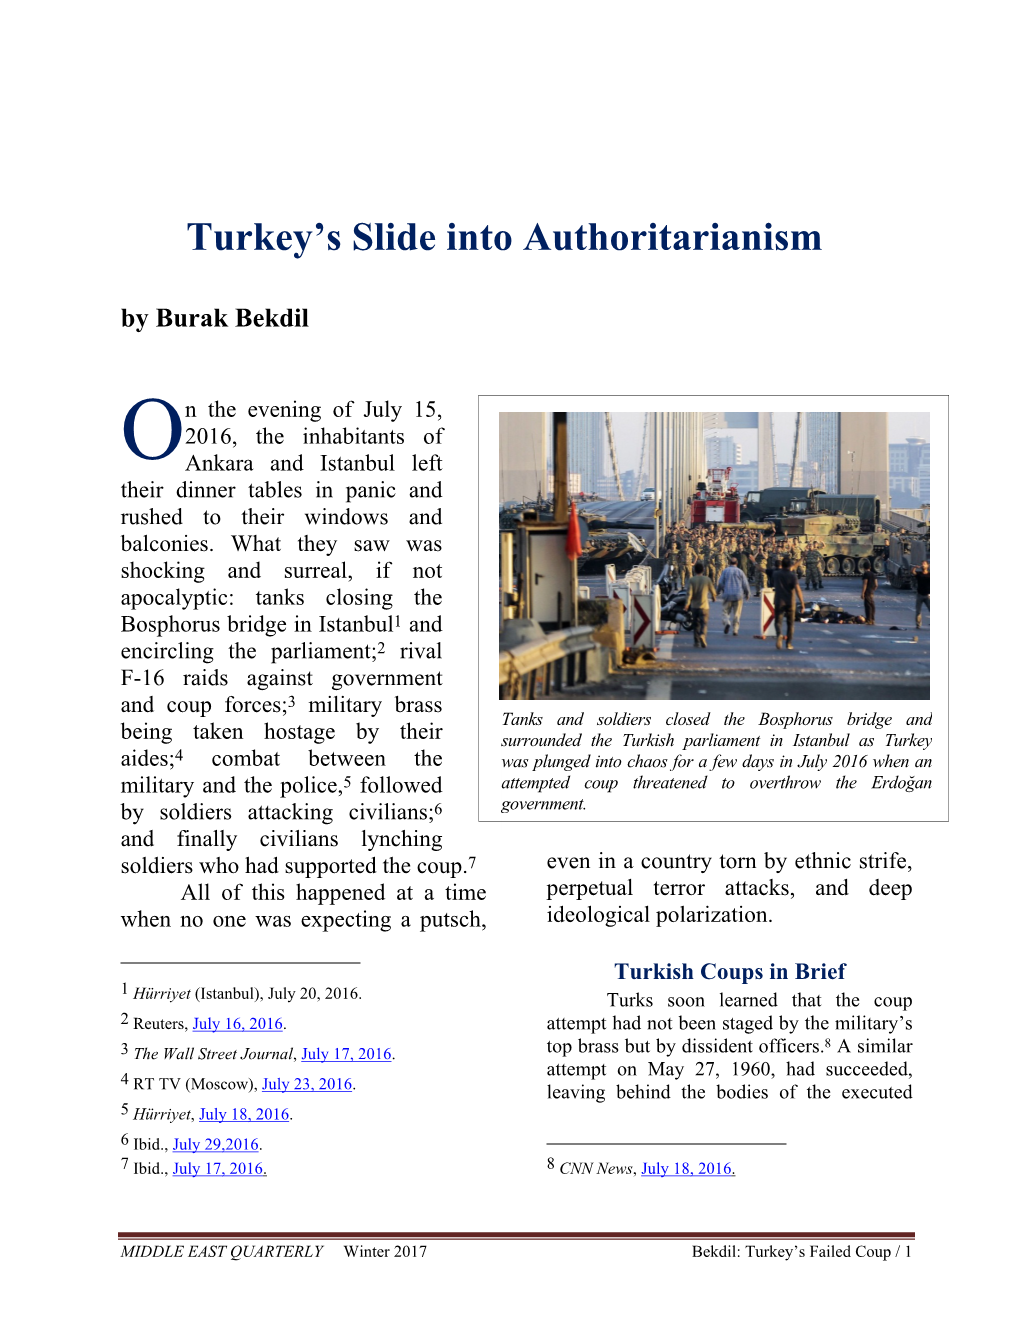 Turkey's Slide Into Authoritarianism